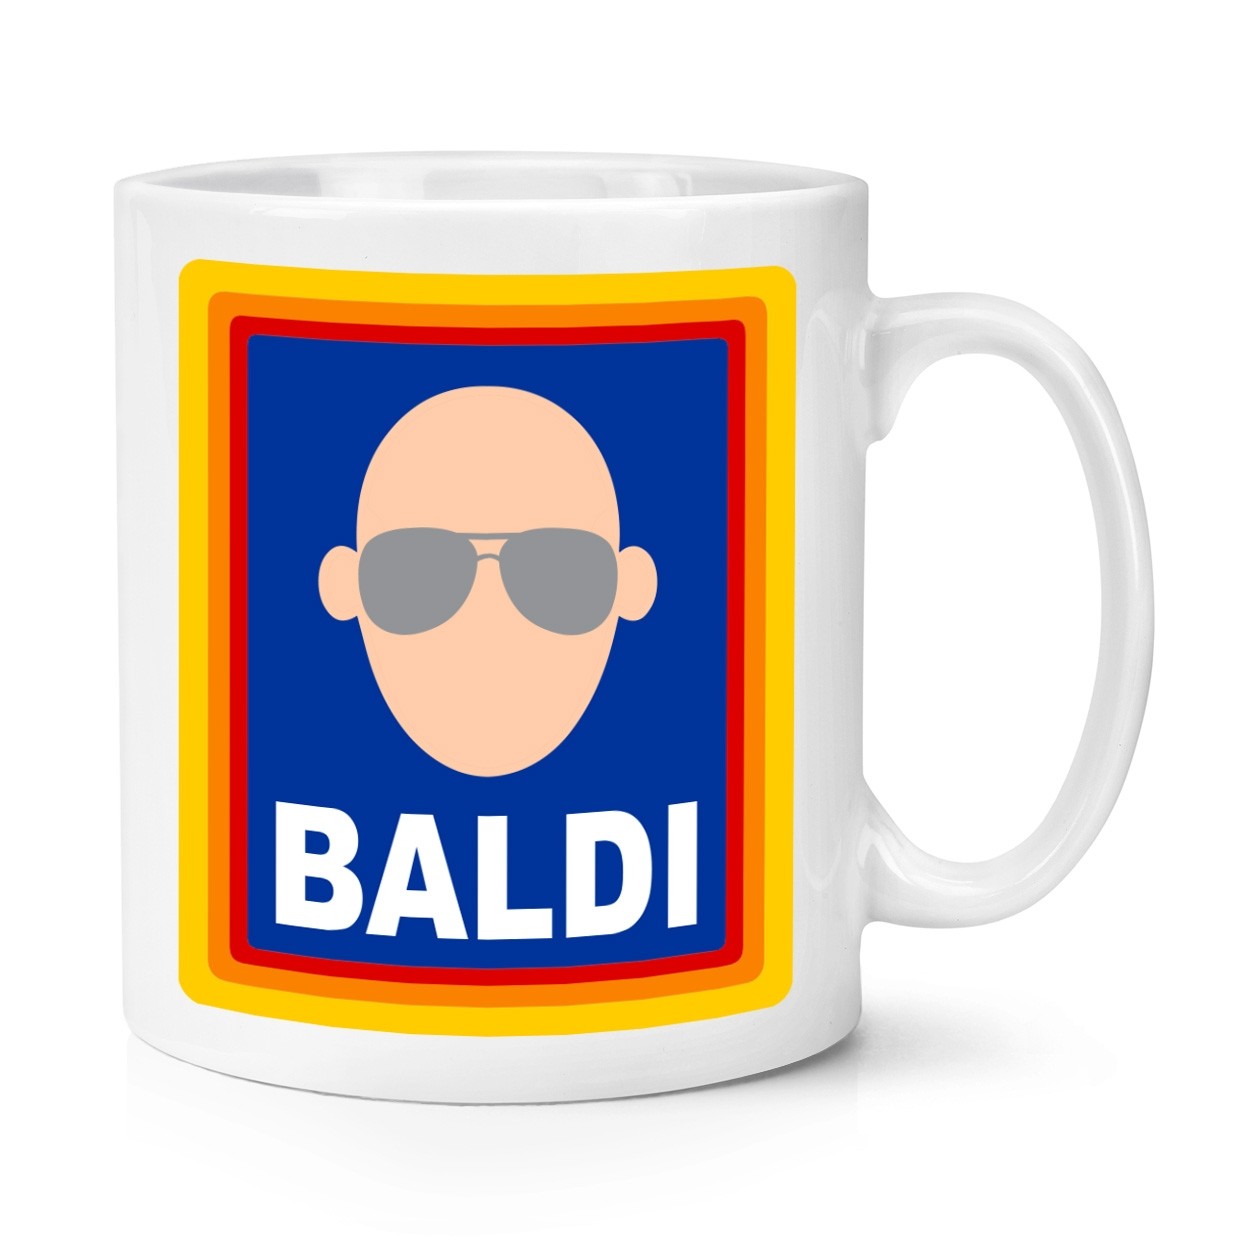 Baldi White 10oz Mug Cup Bald Funny Grandad Dad Uncle Old Joke Rude Birthday OAP